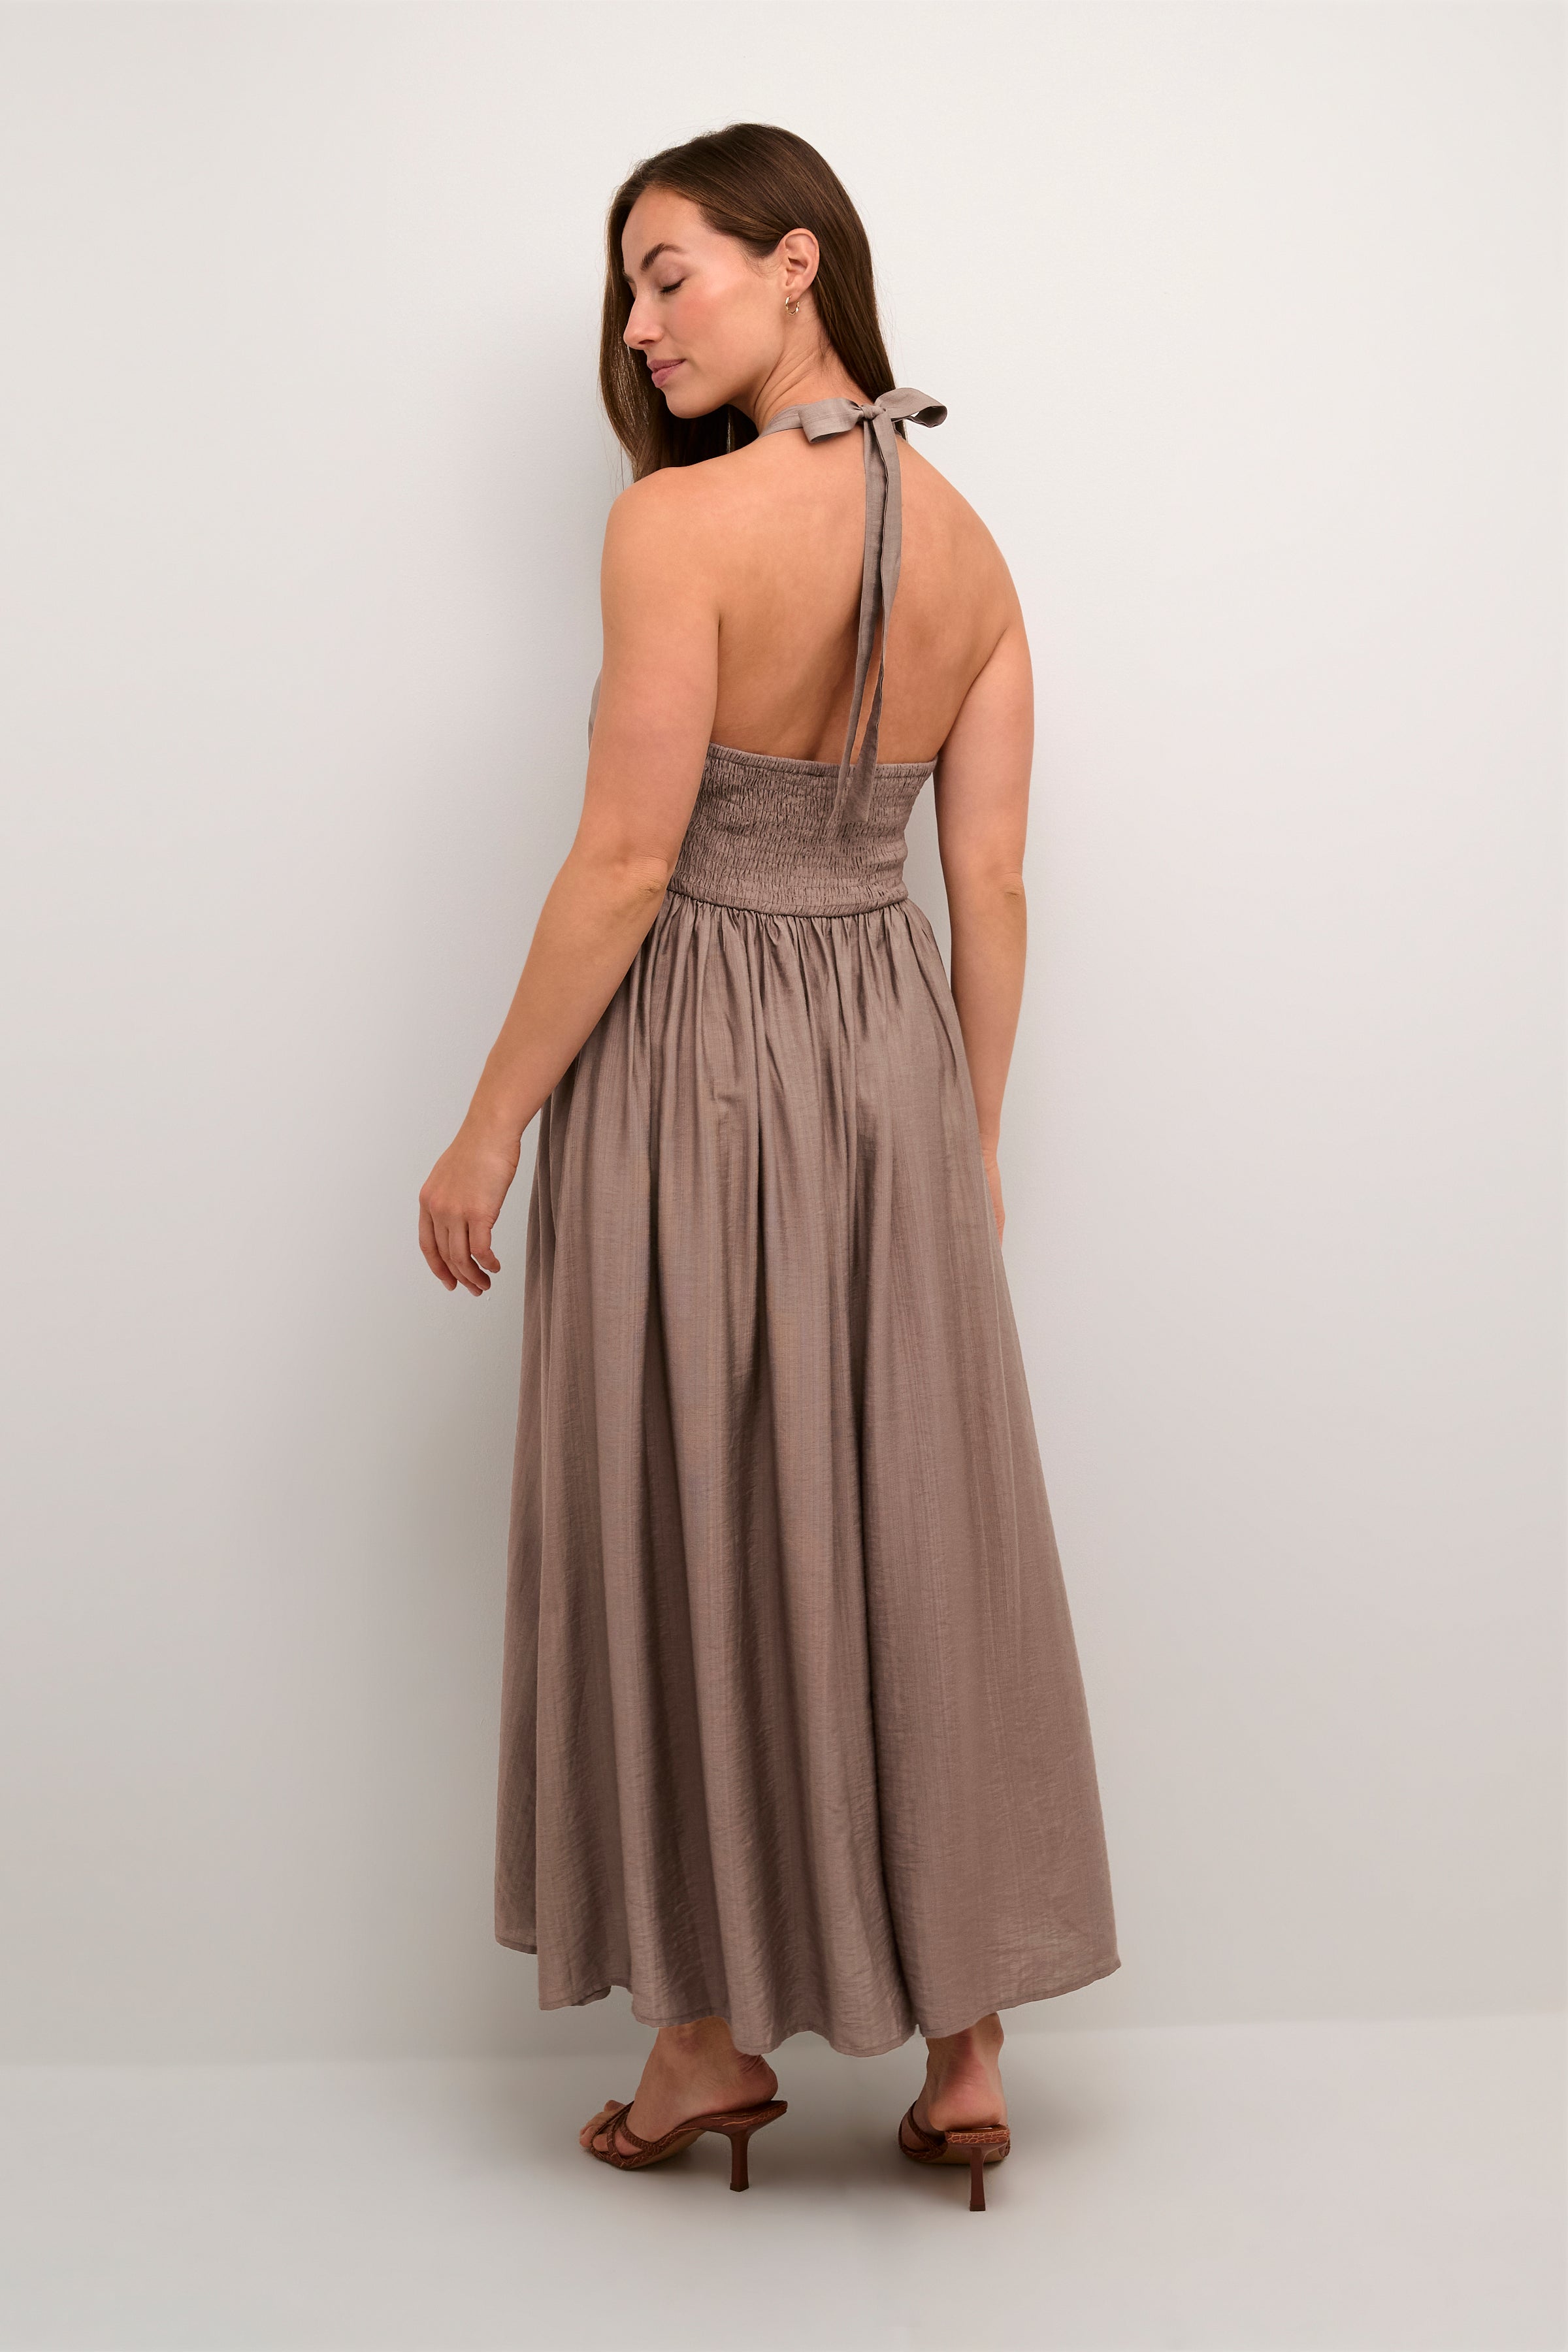 Amino Halterneck Dress in Taupe Grey